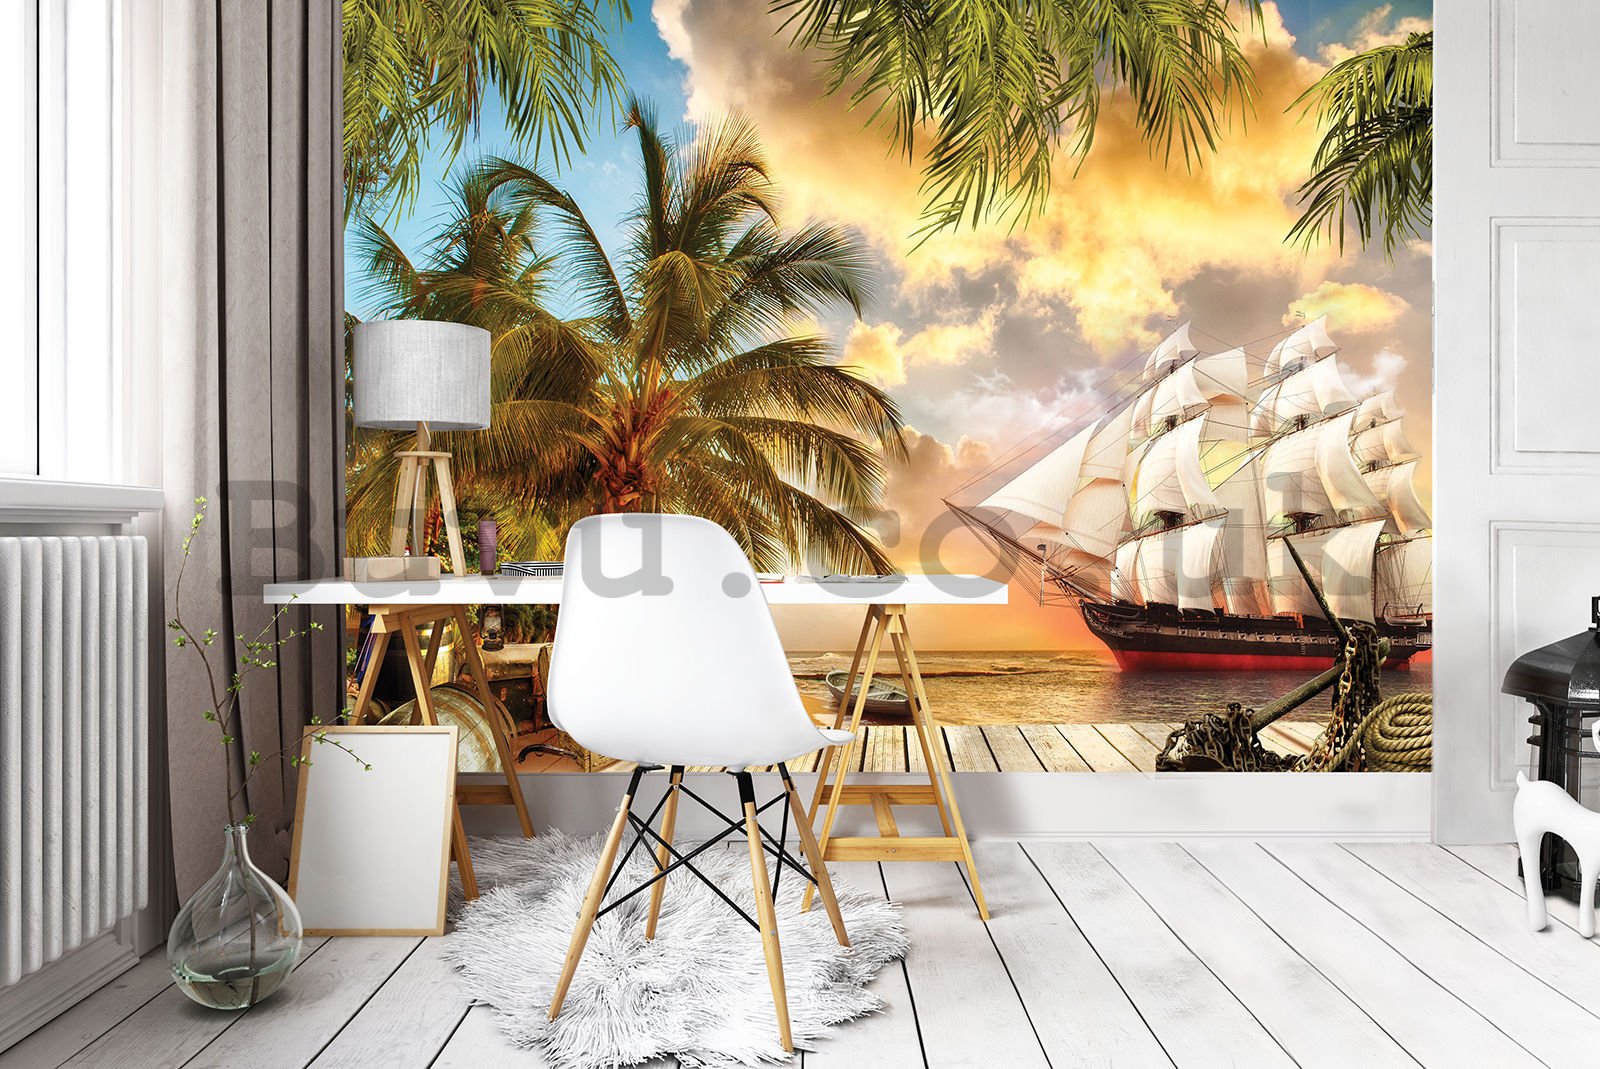 Wall mural vlies: Sailboat in paradise - 254x368 cm